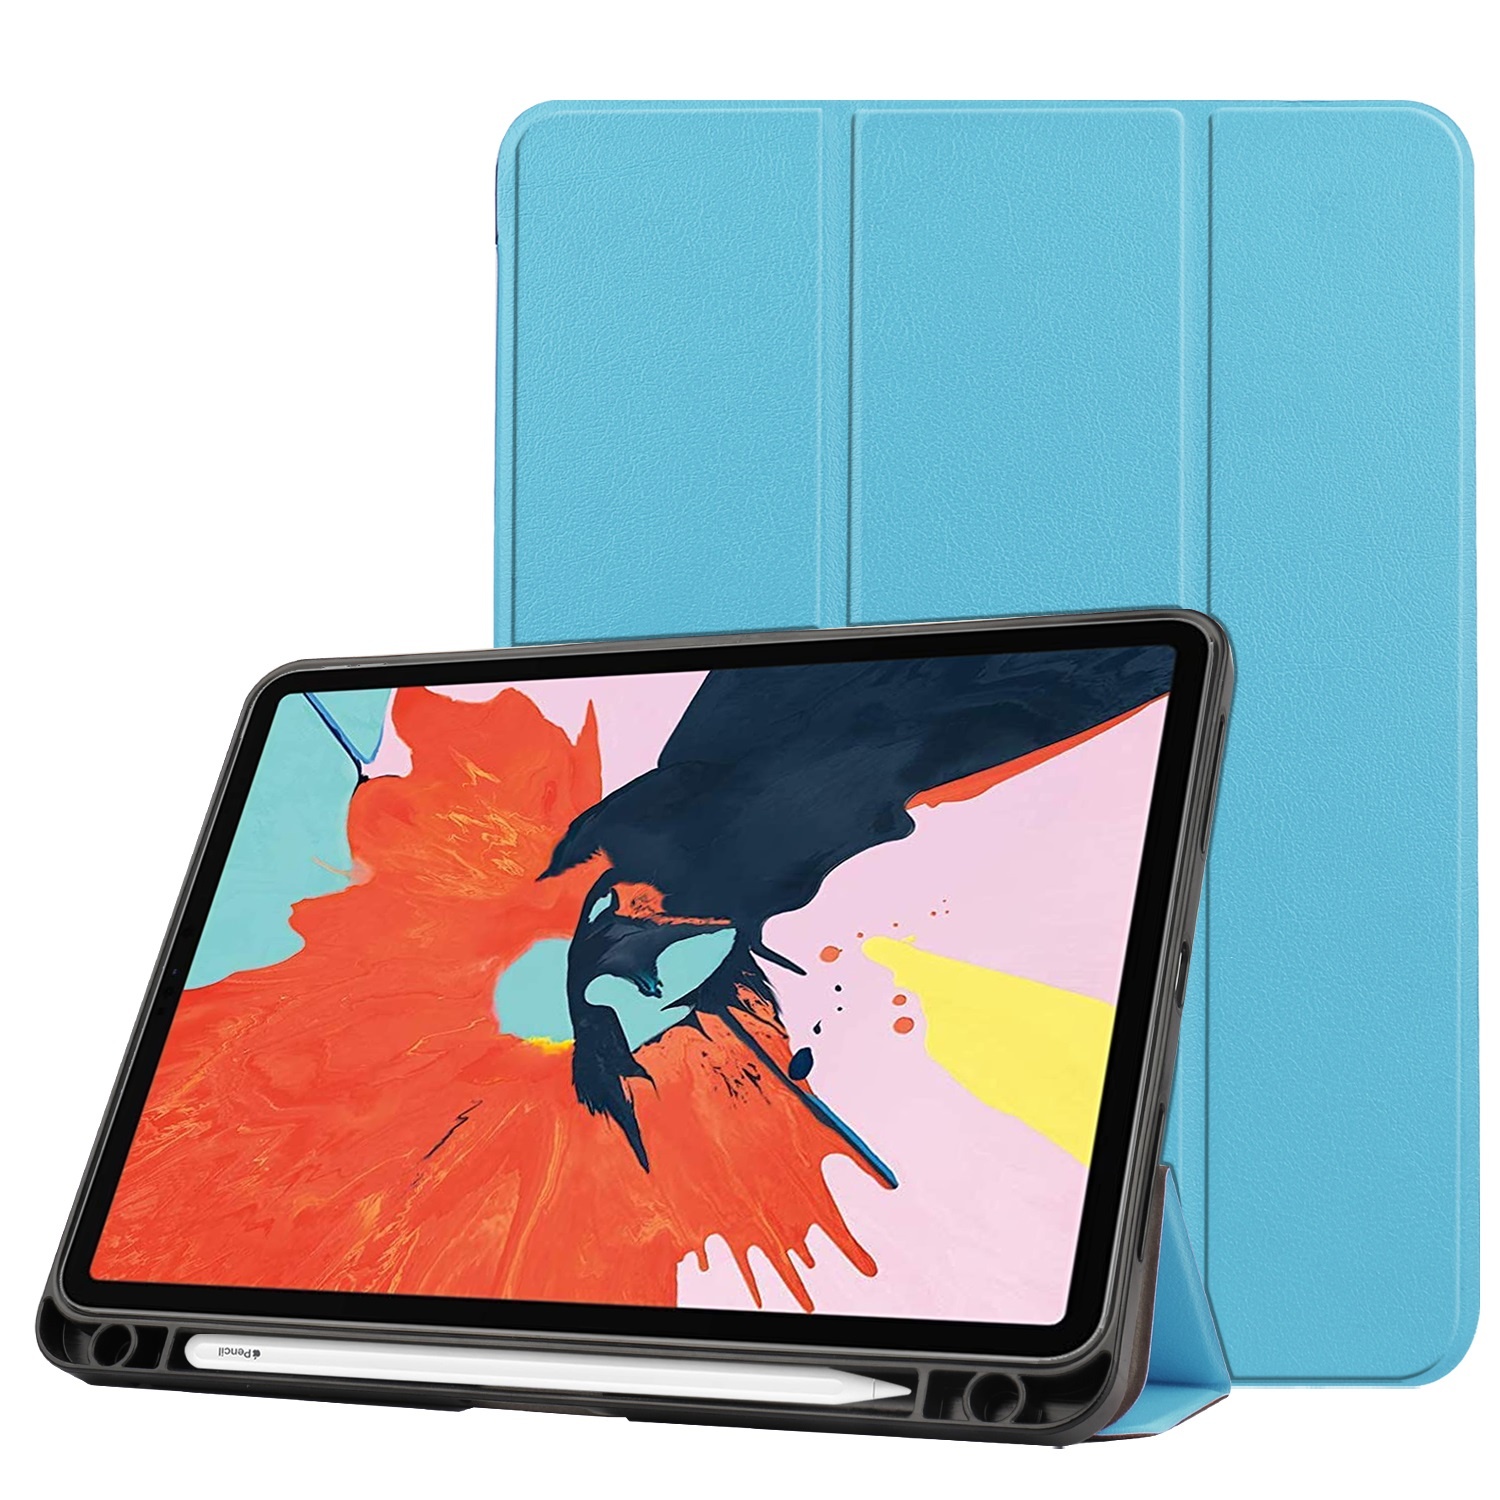 Pat feit Nieuwsgierigheid Case2go Case2go - Tablet Hoes geschikt voor Apple iPad Air 2022 - 10.9 inch  - Tri-Fold Book Case - Apple Pencil Houder - Licht Blauw | Case2go.nl